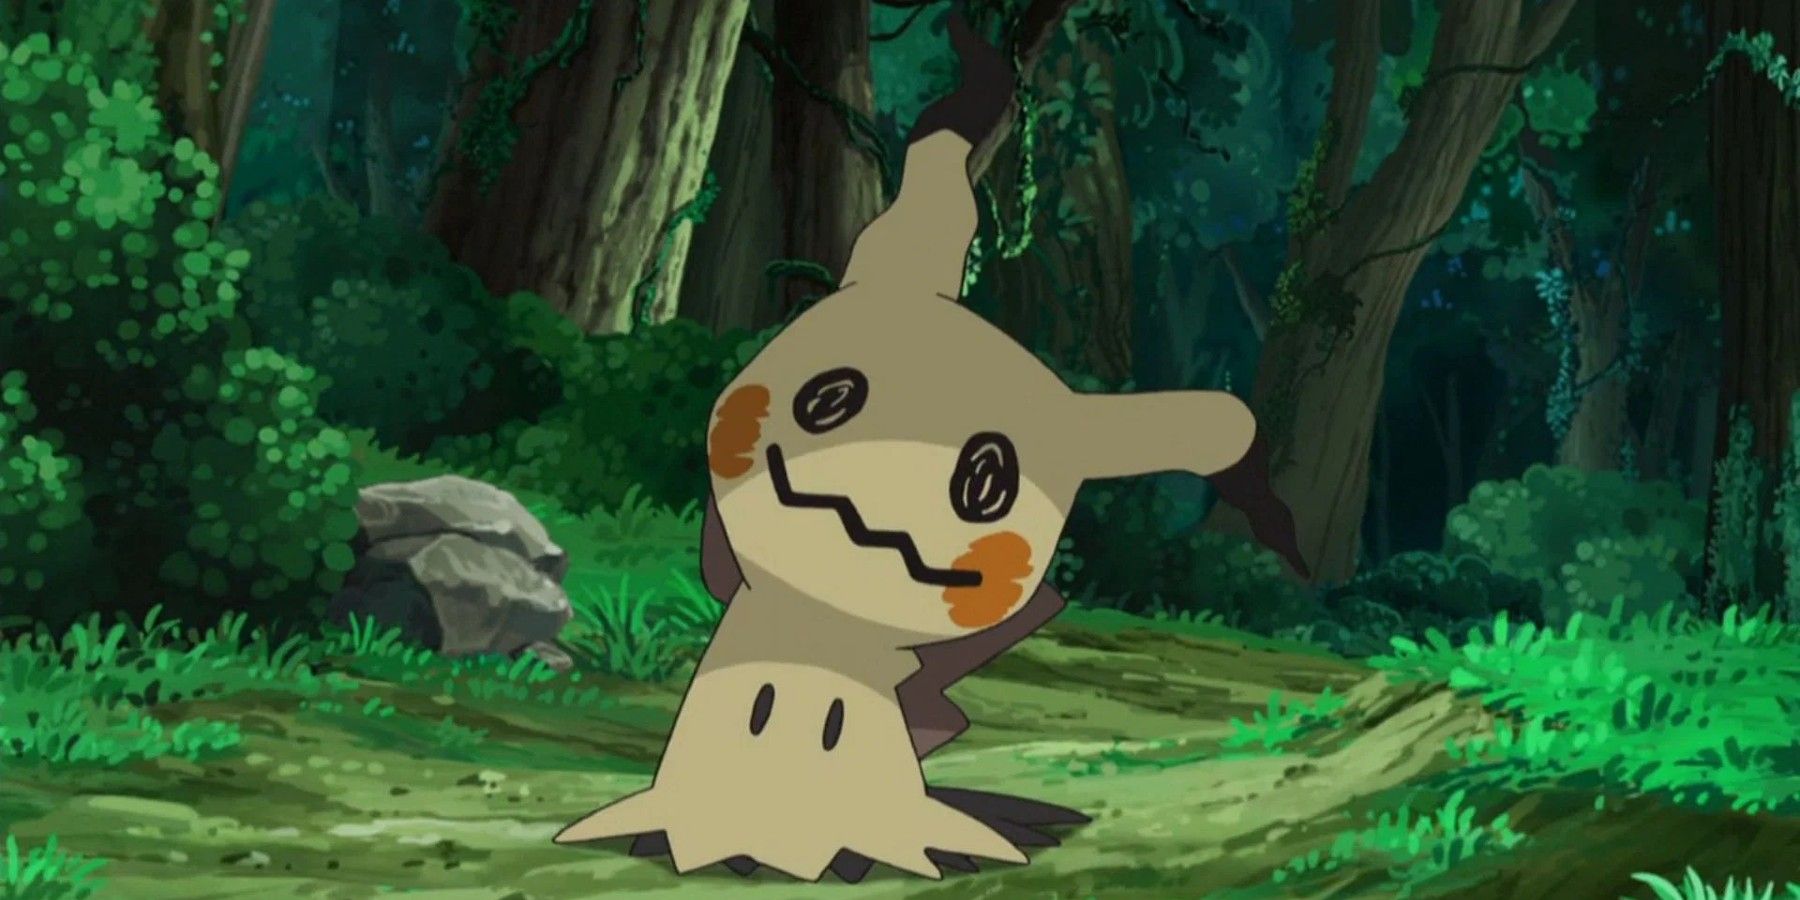 Mimikyu Pokemon in the woods